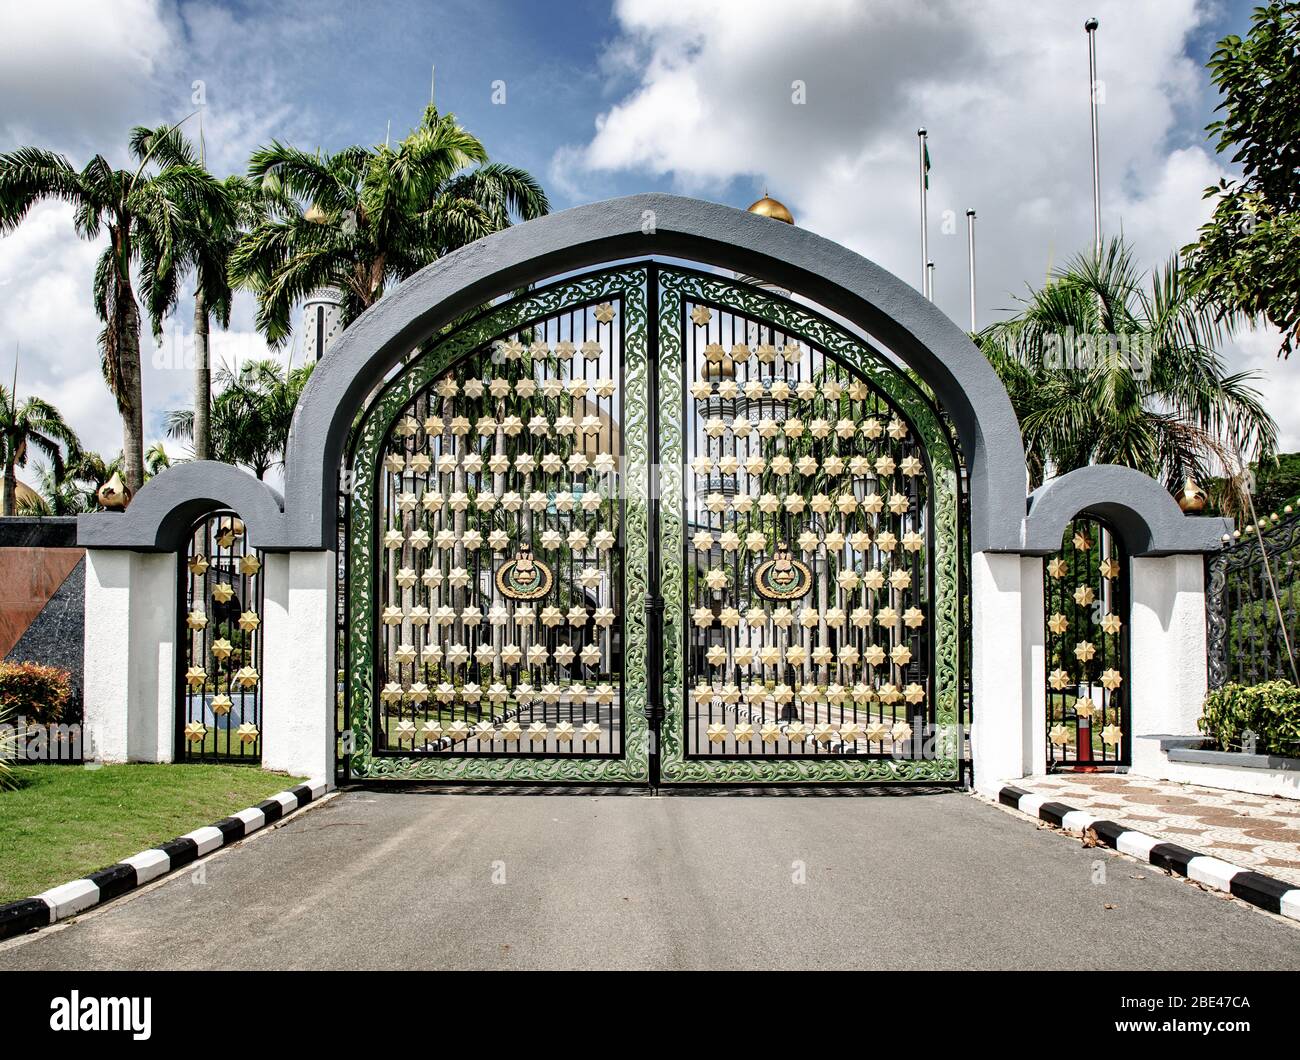 Porte d'entrée principale de la mosquée Jame' ASR Hassanil Bolkiah à midi dans le Ramadan - Puerta de entrada principal a la mezquita durante el Ramadan Banque D'Images